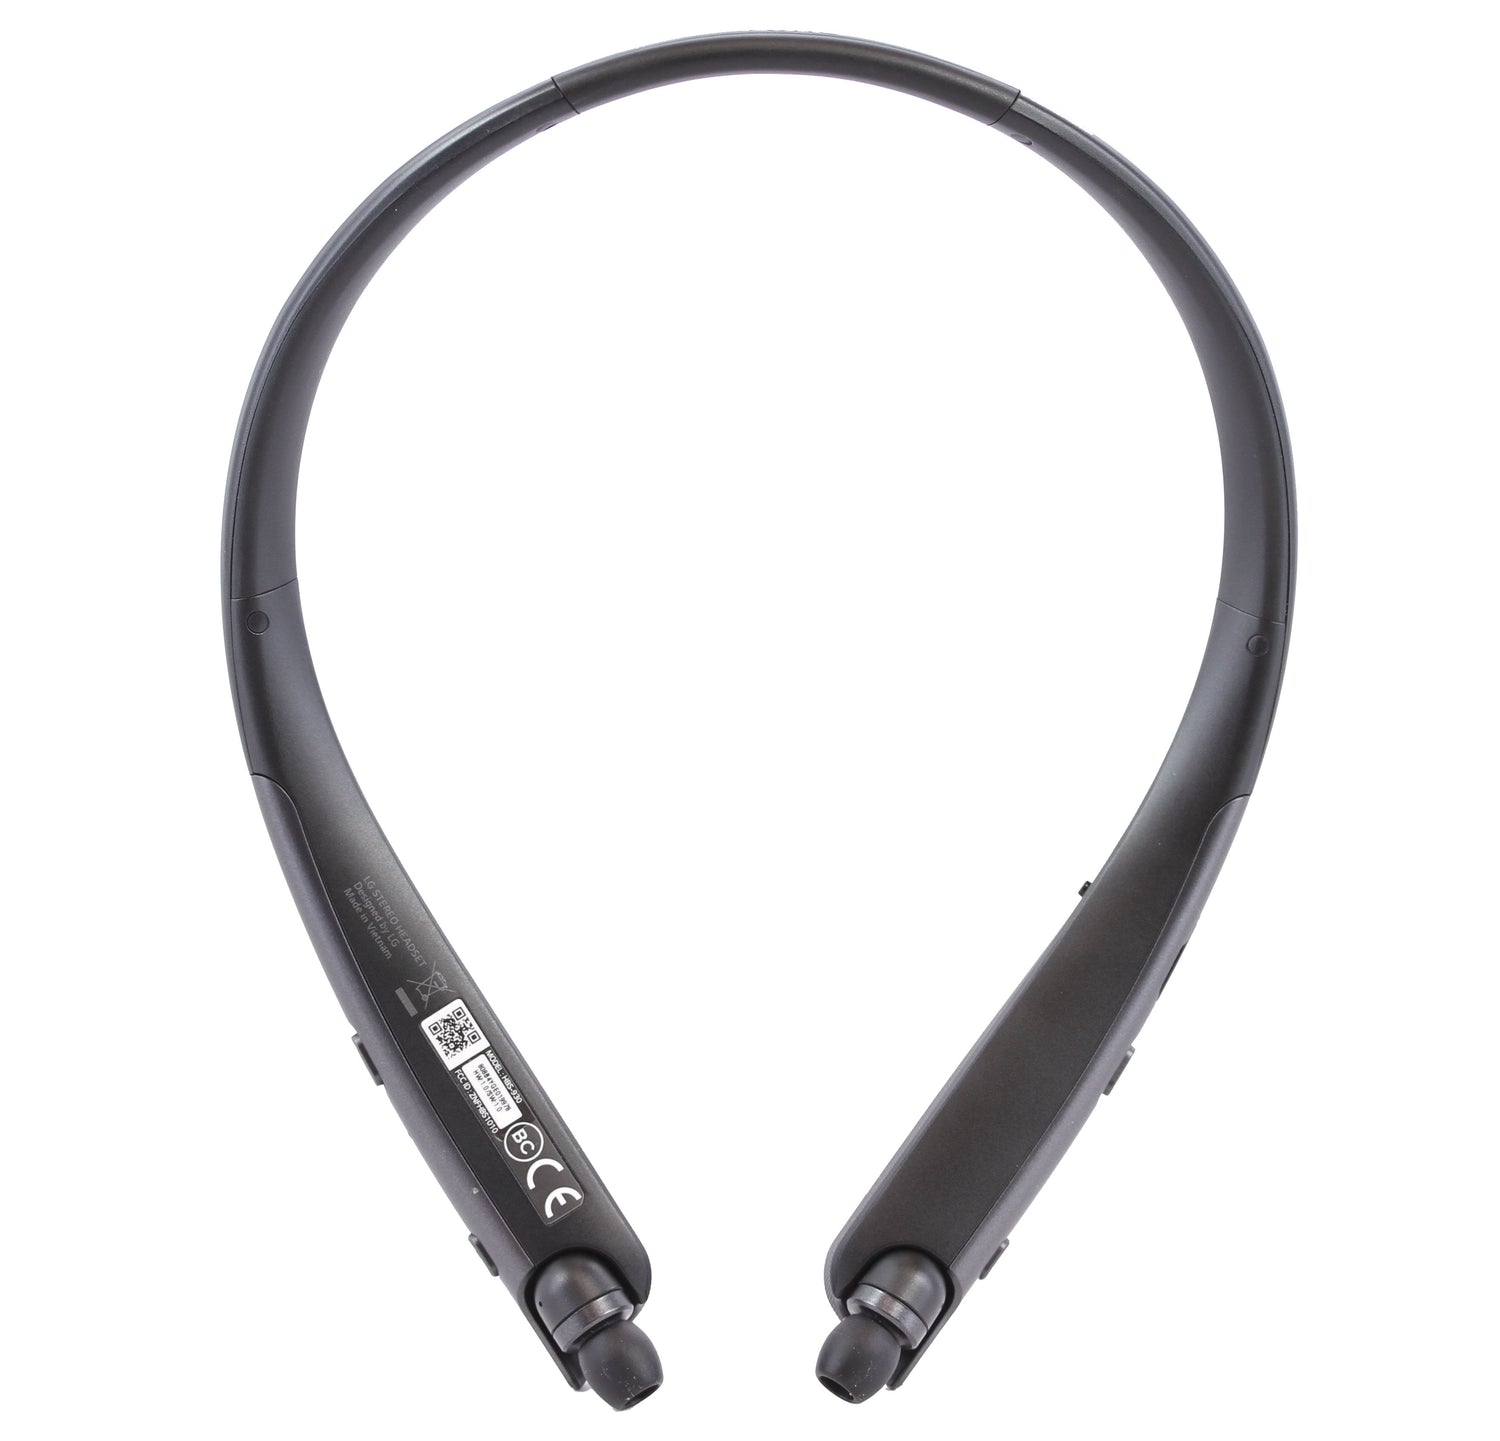 LG Tone HBS-930 Platinum Alpha Stereo Headset - Black